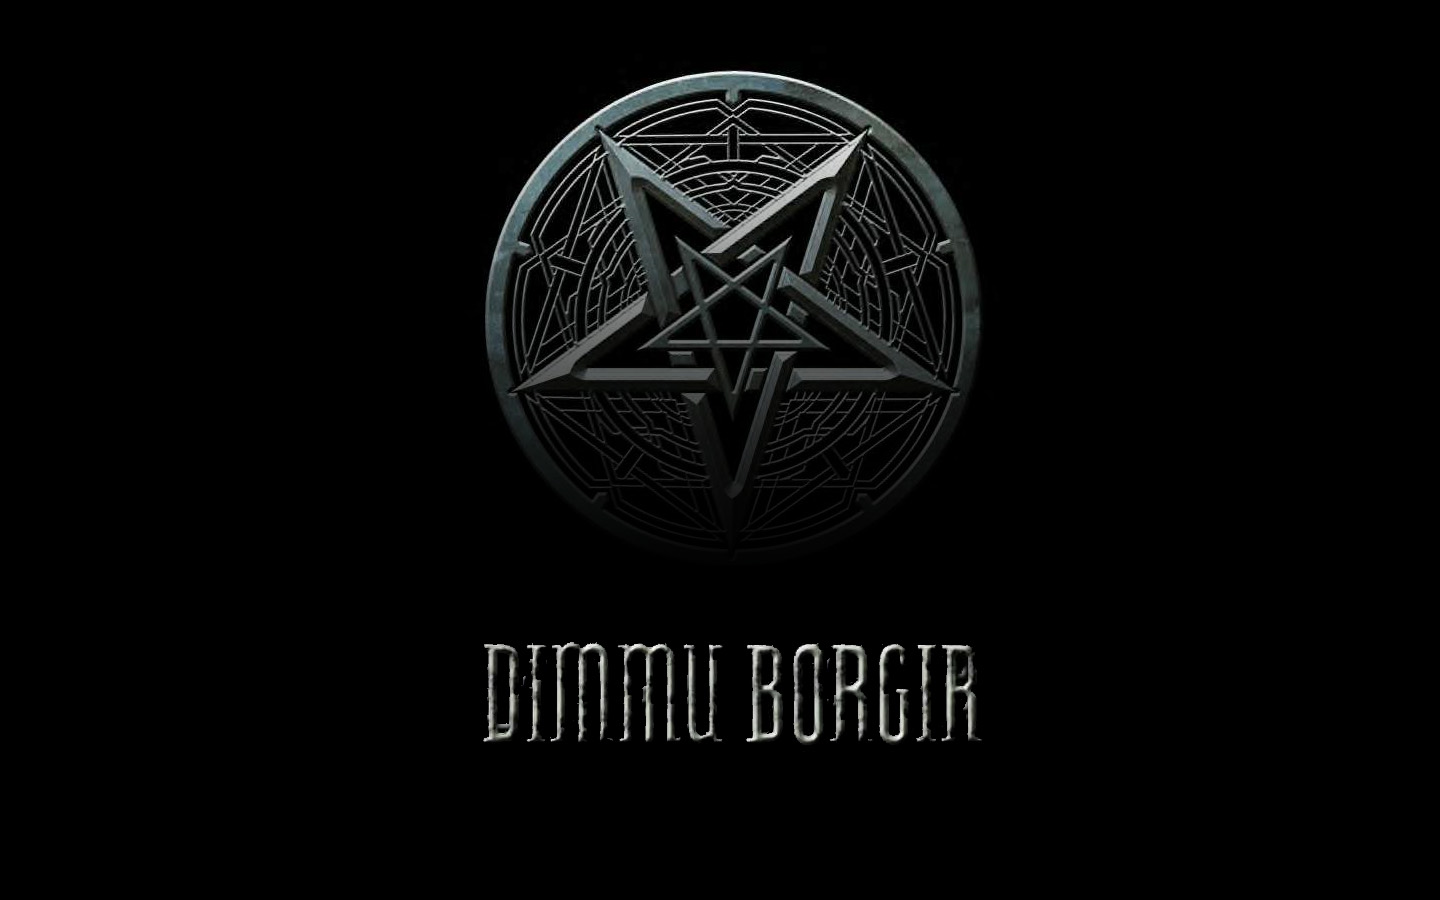 Popular Black Metal Image for Phone